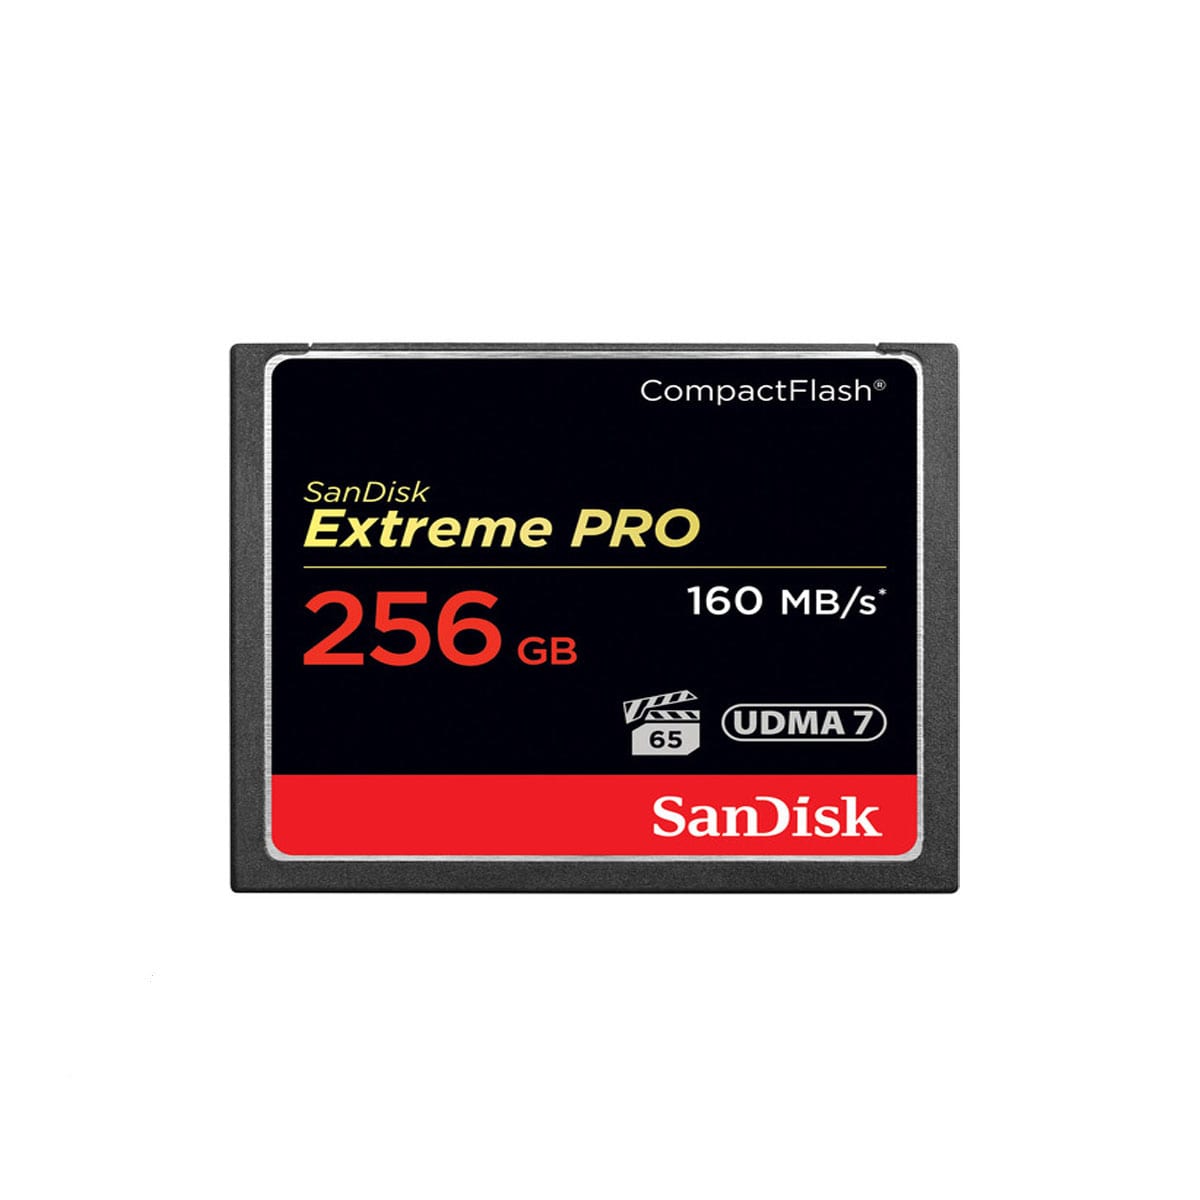 Sandisk CF Card, 256GB, 160MB/s